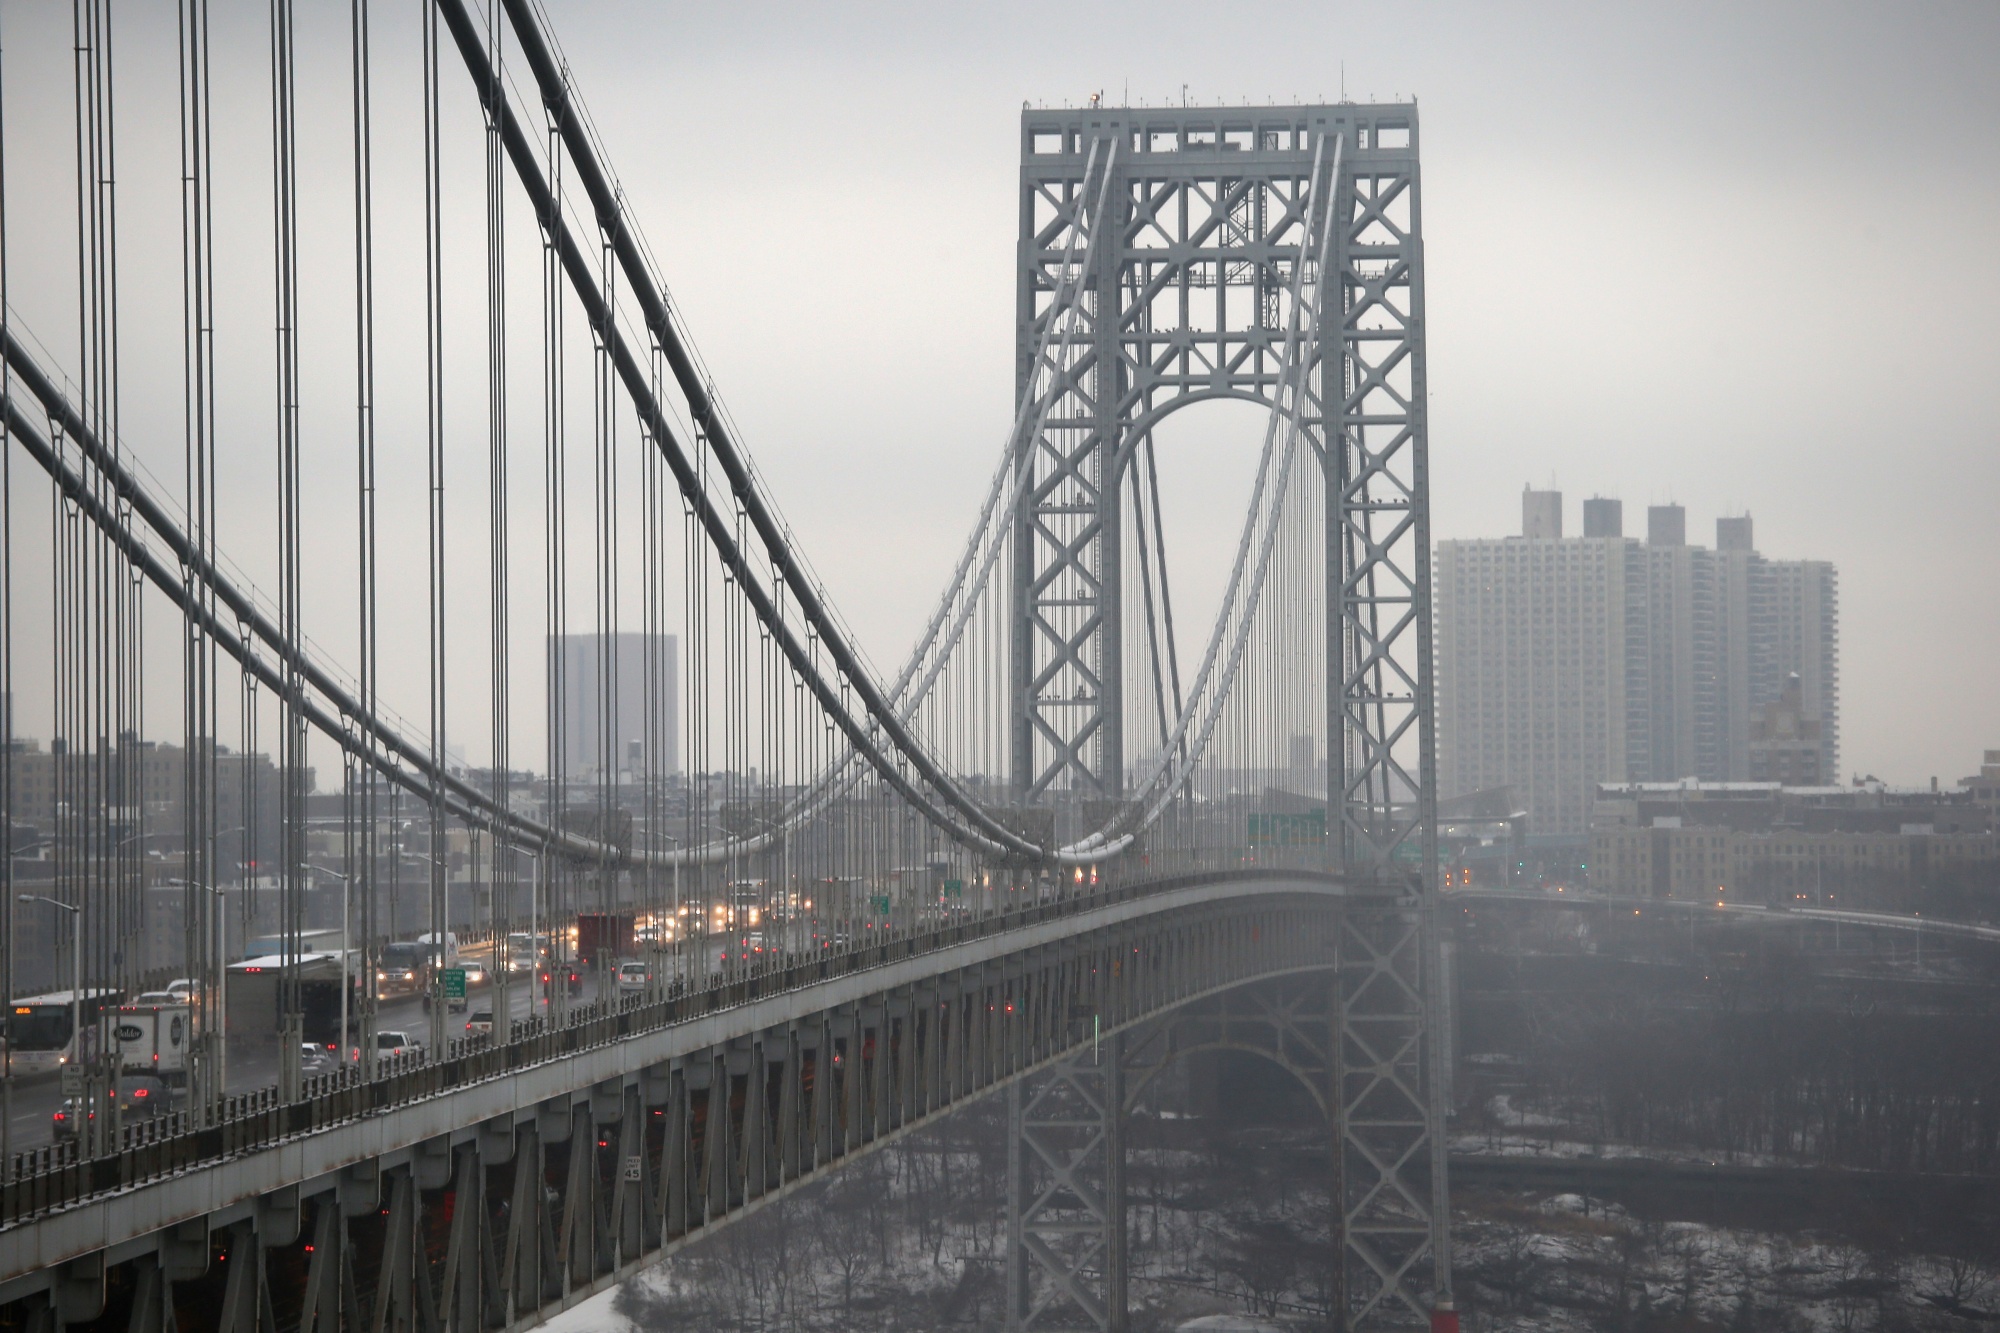 The George Washington Bridge in New York City is a major choke point for traffic.&nbsp;